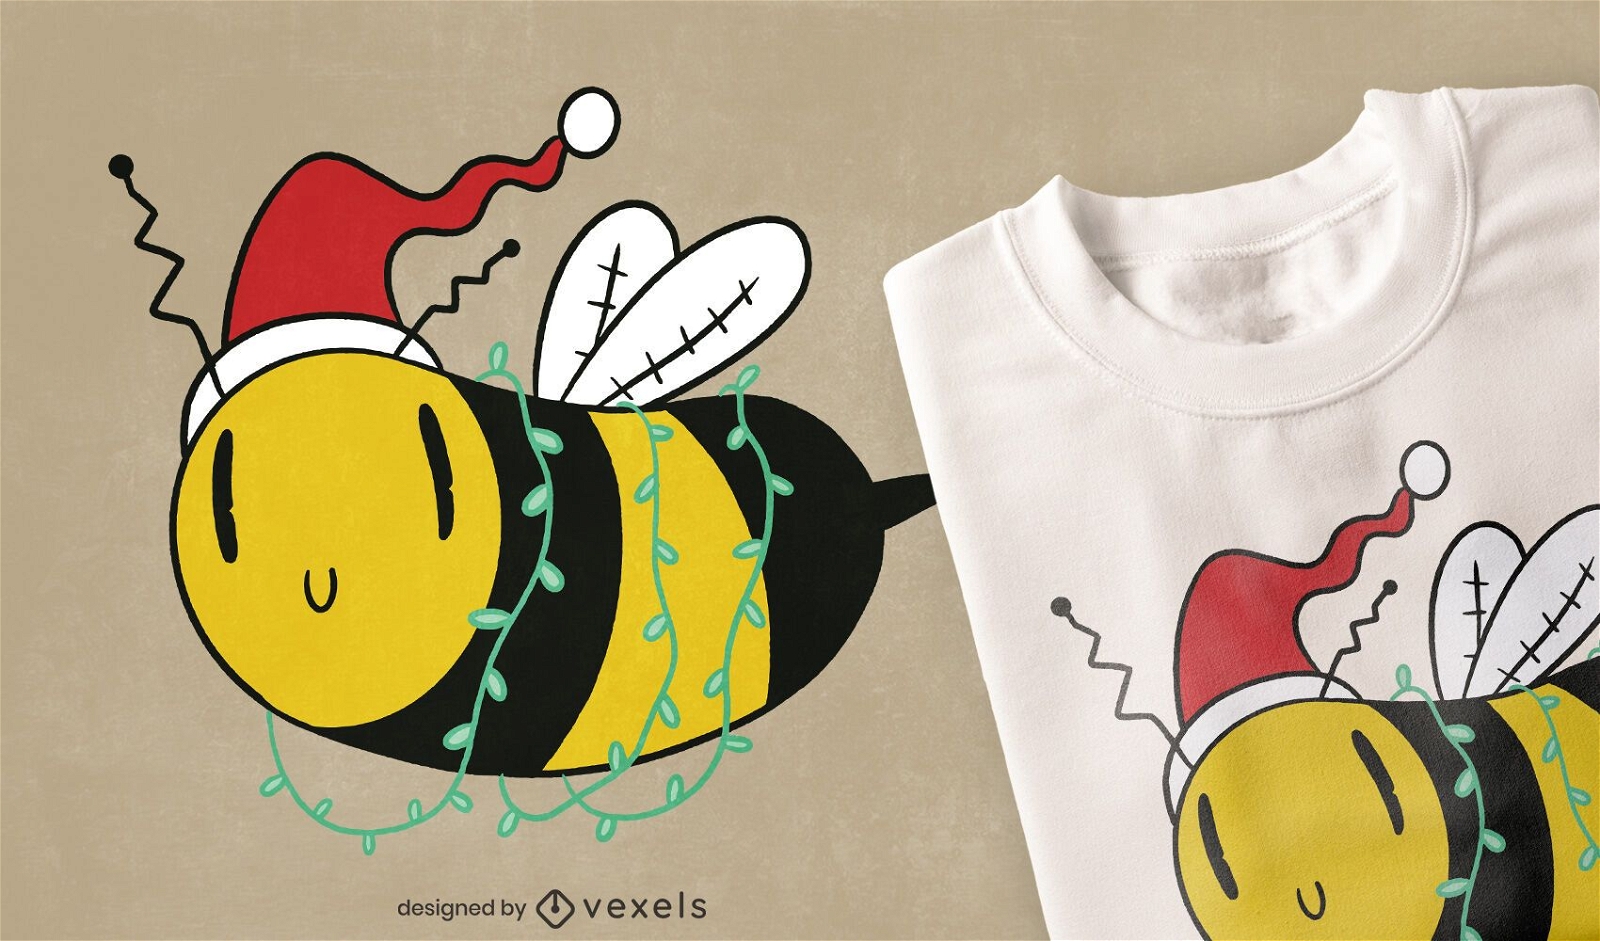 Dise?o de camiseta de abeja navide?a